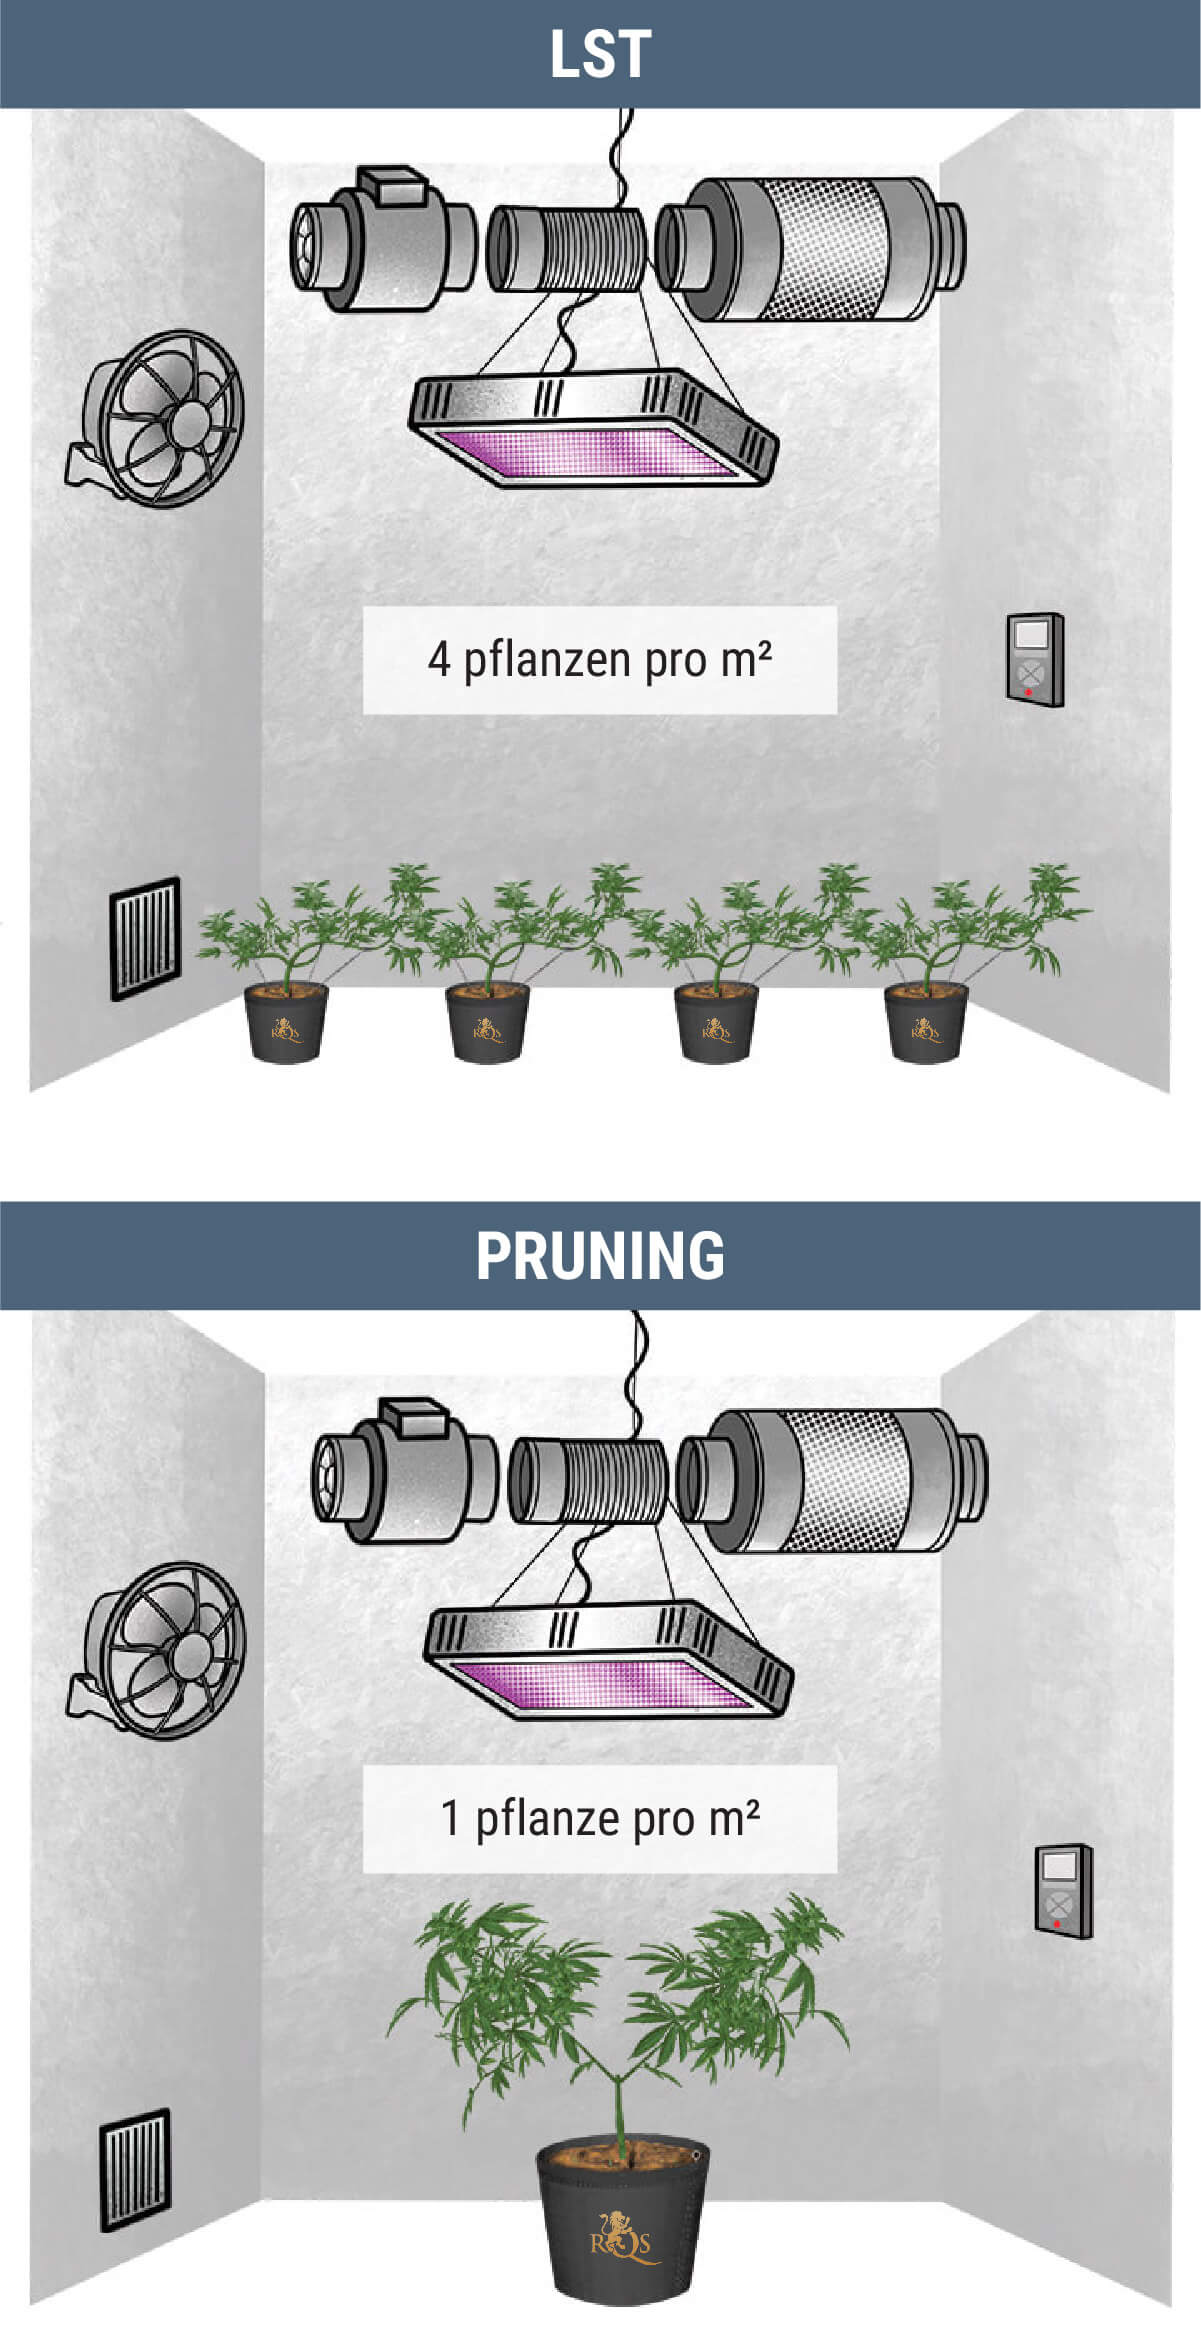 Wie Viele Cannabispflanzen Kann Man Pro Quadratmeter Anbauen?